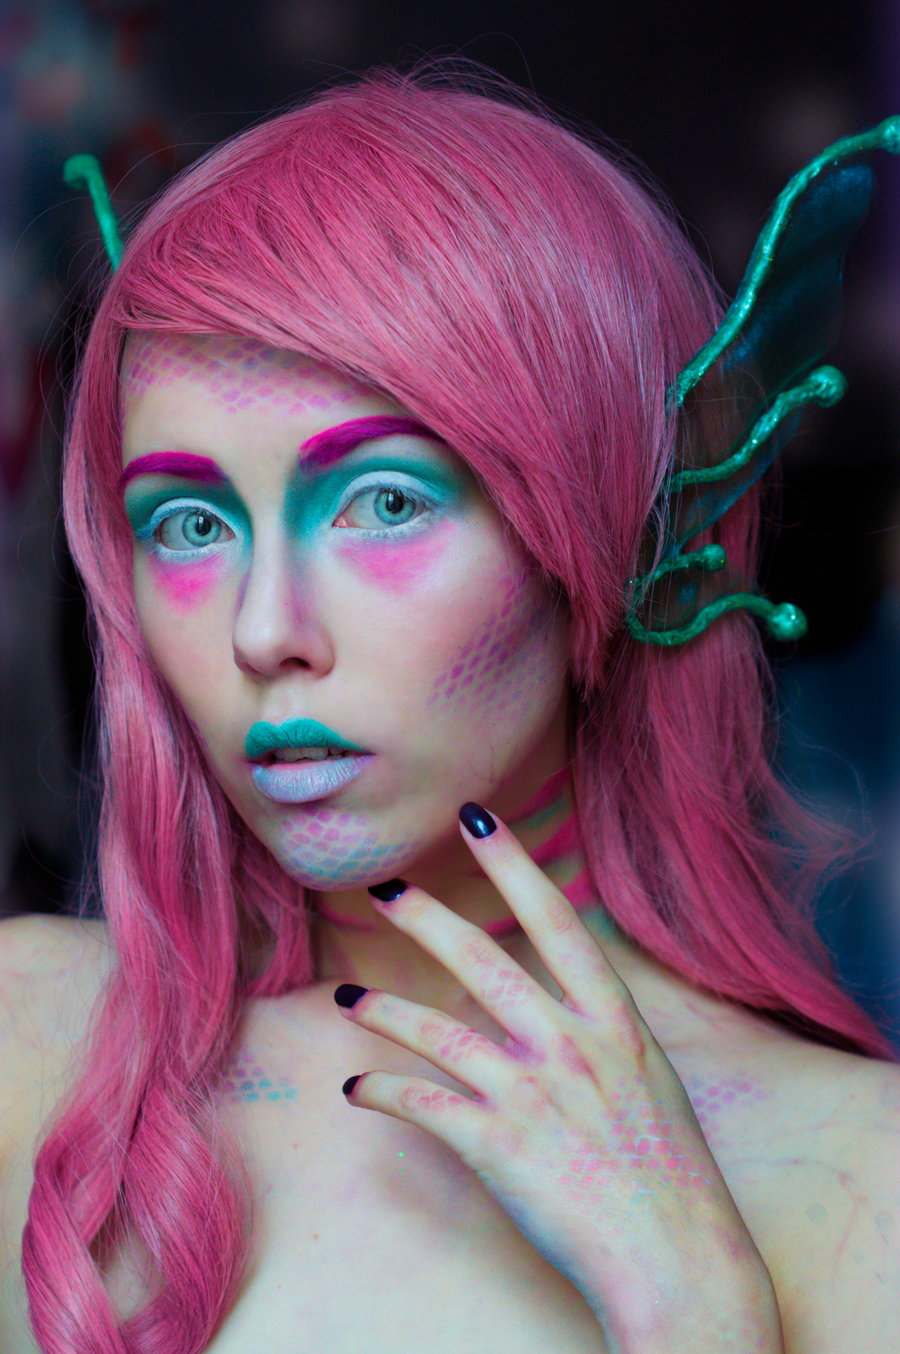 Lonely Mermaid Halloween makeup by Helen-Stifler on DeviantArt